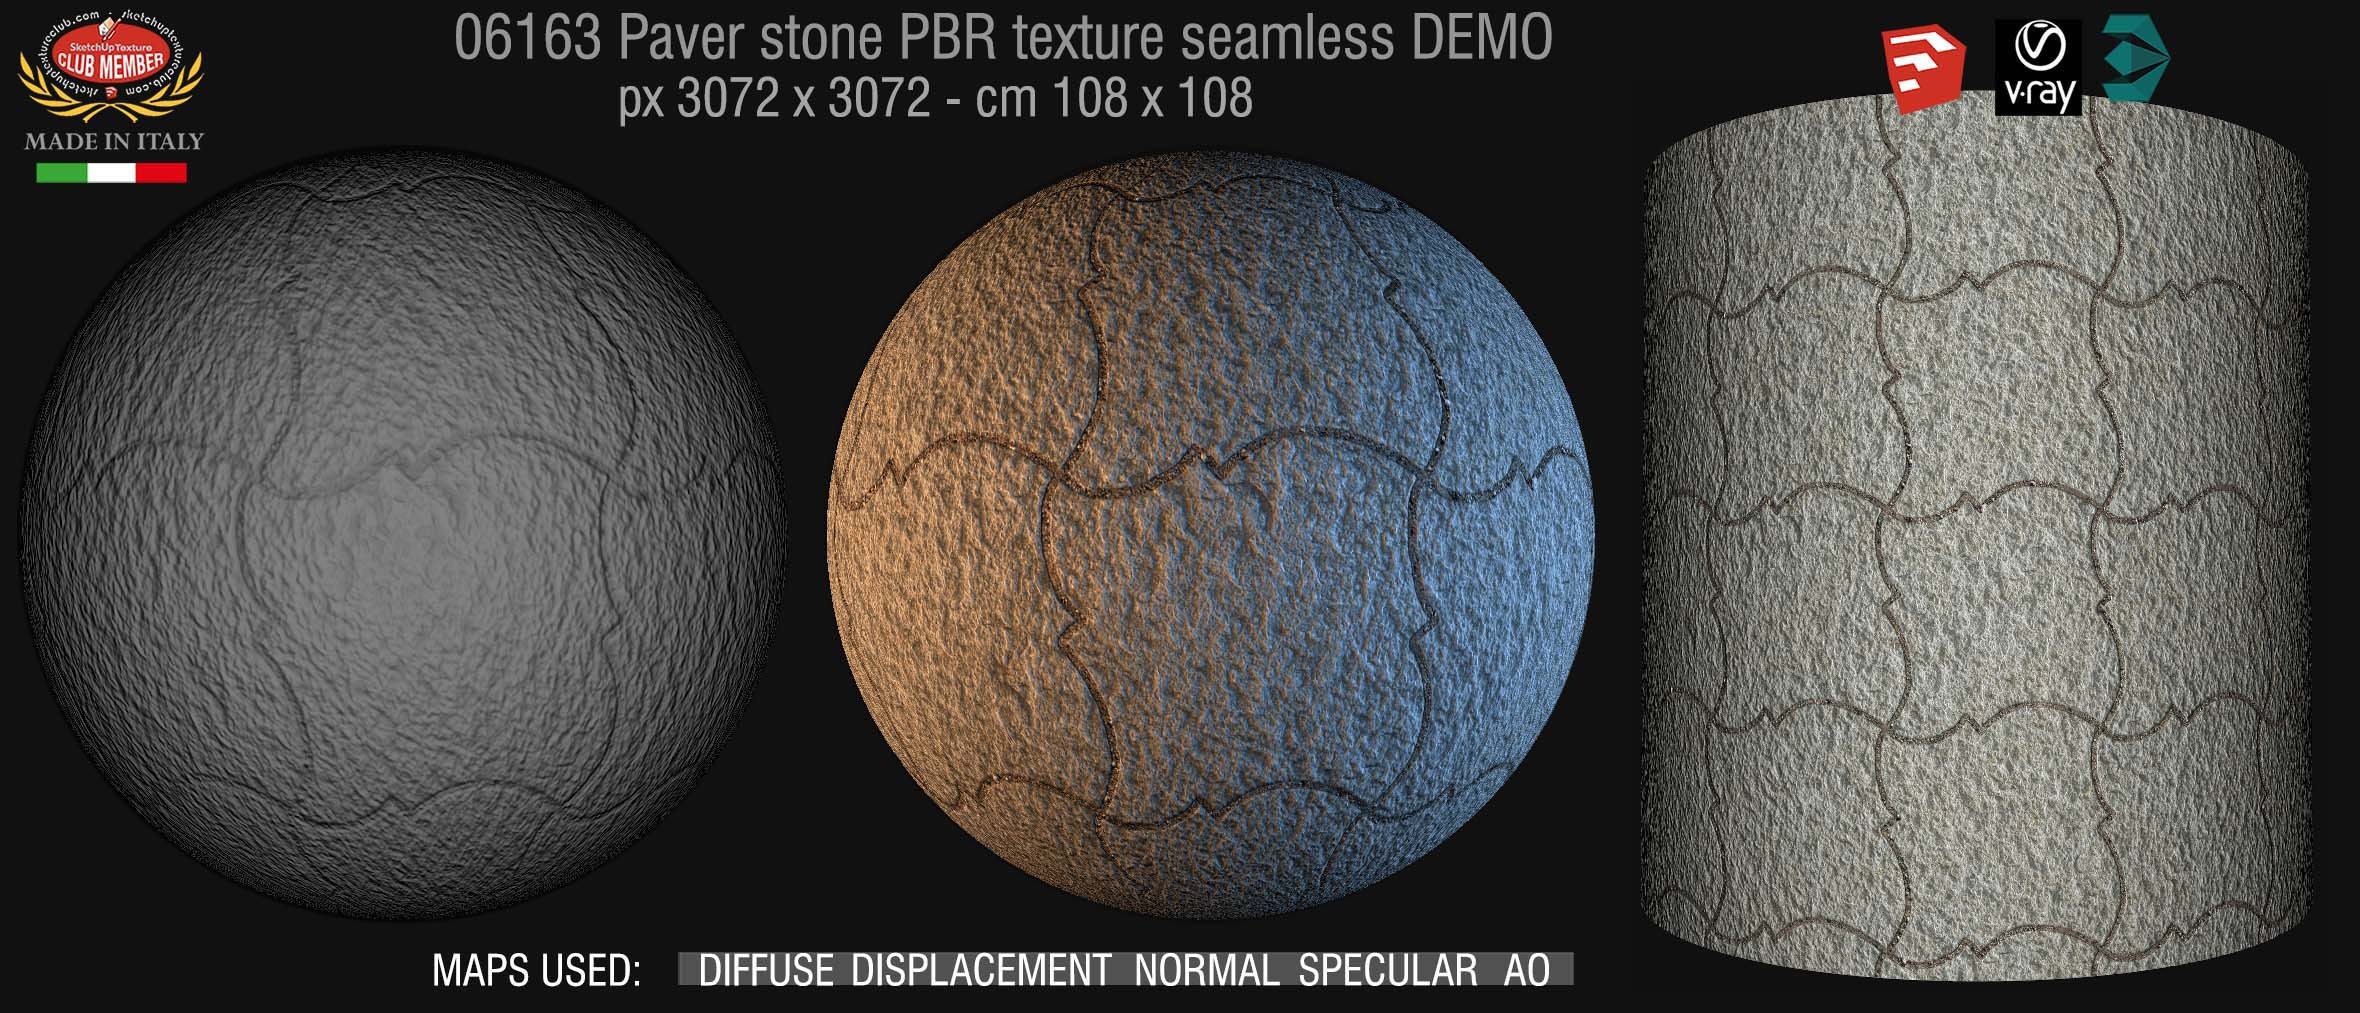 06163 paver stone PBR texture seamless DEMO